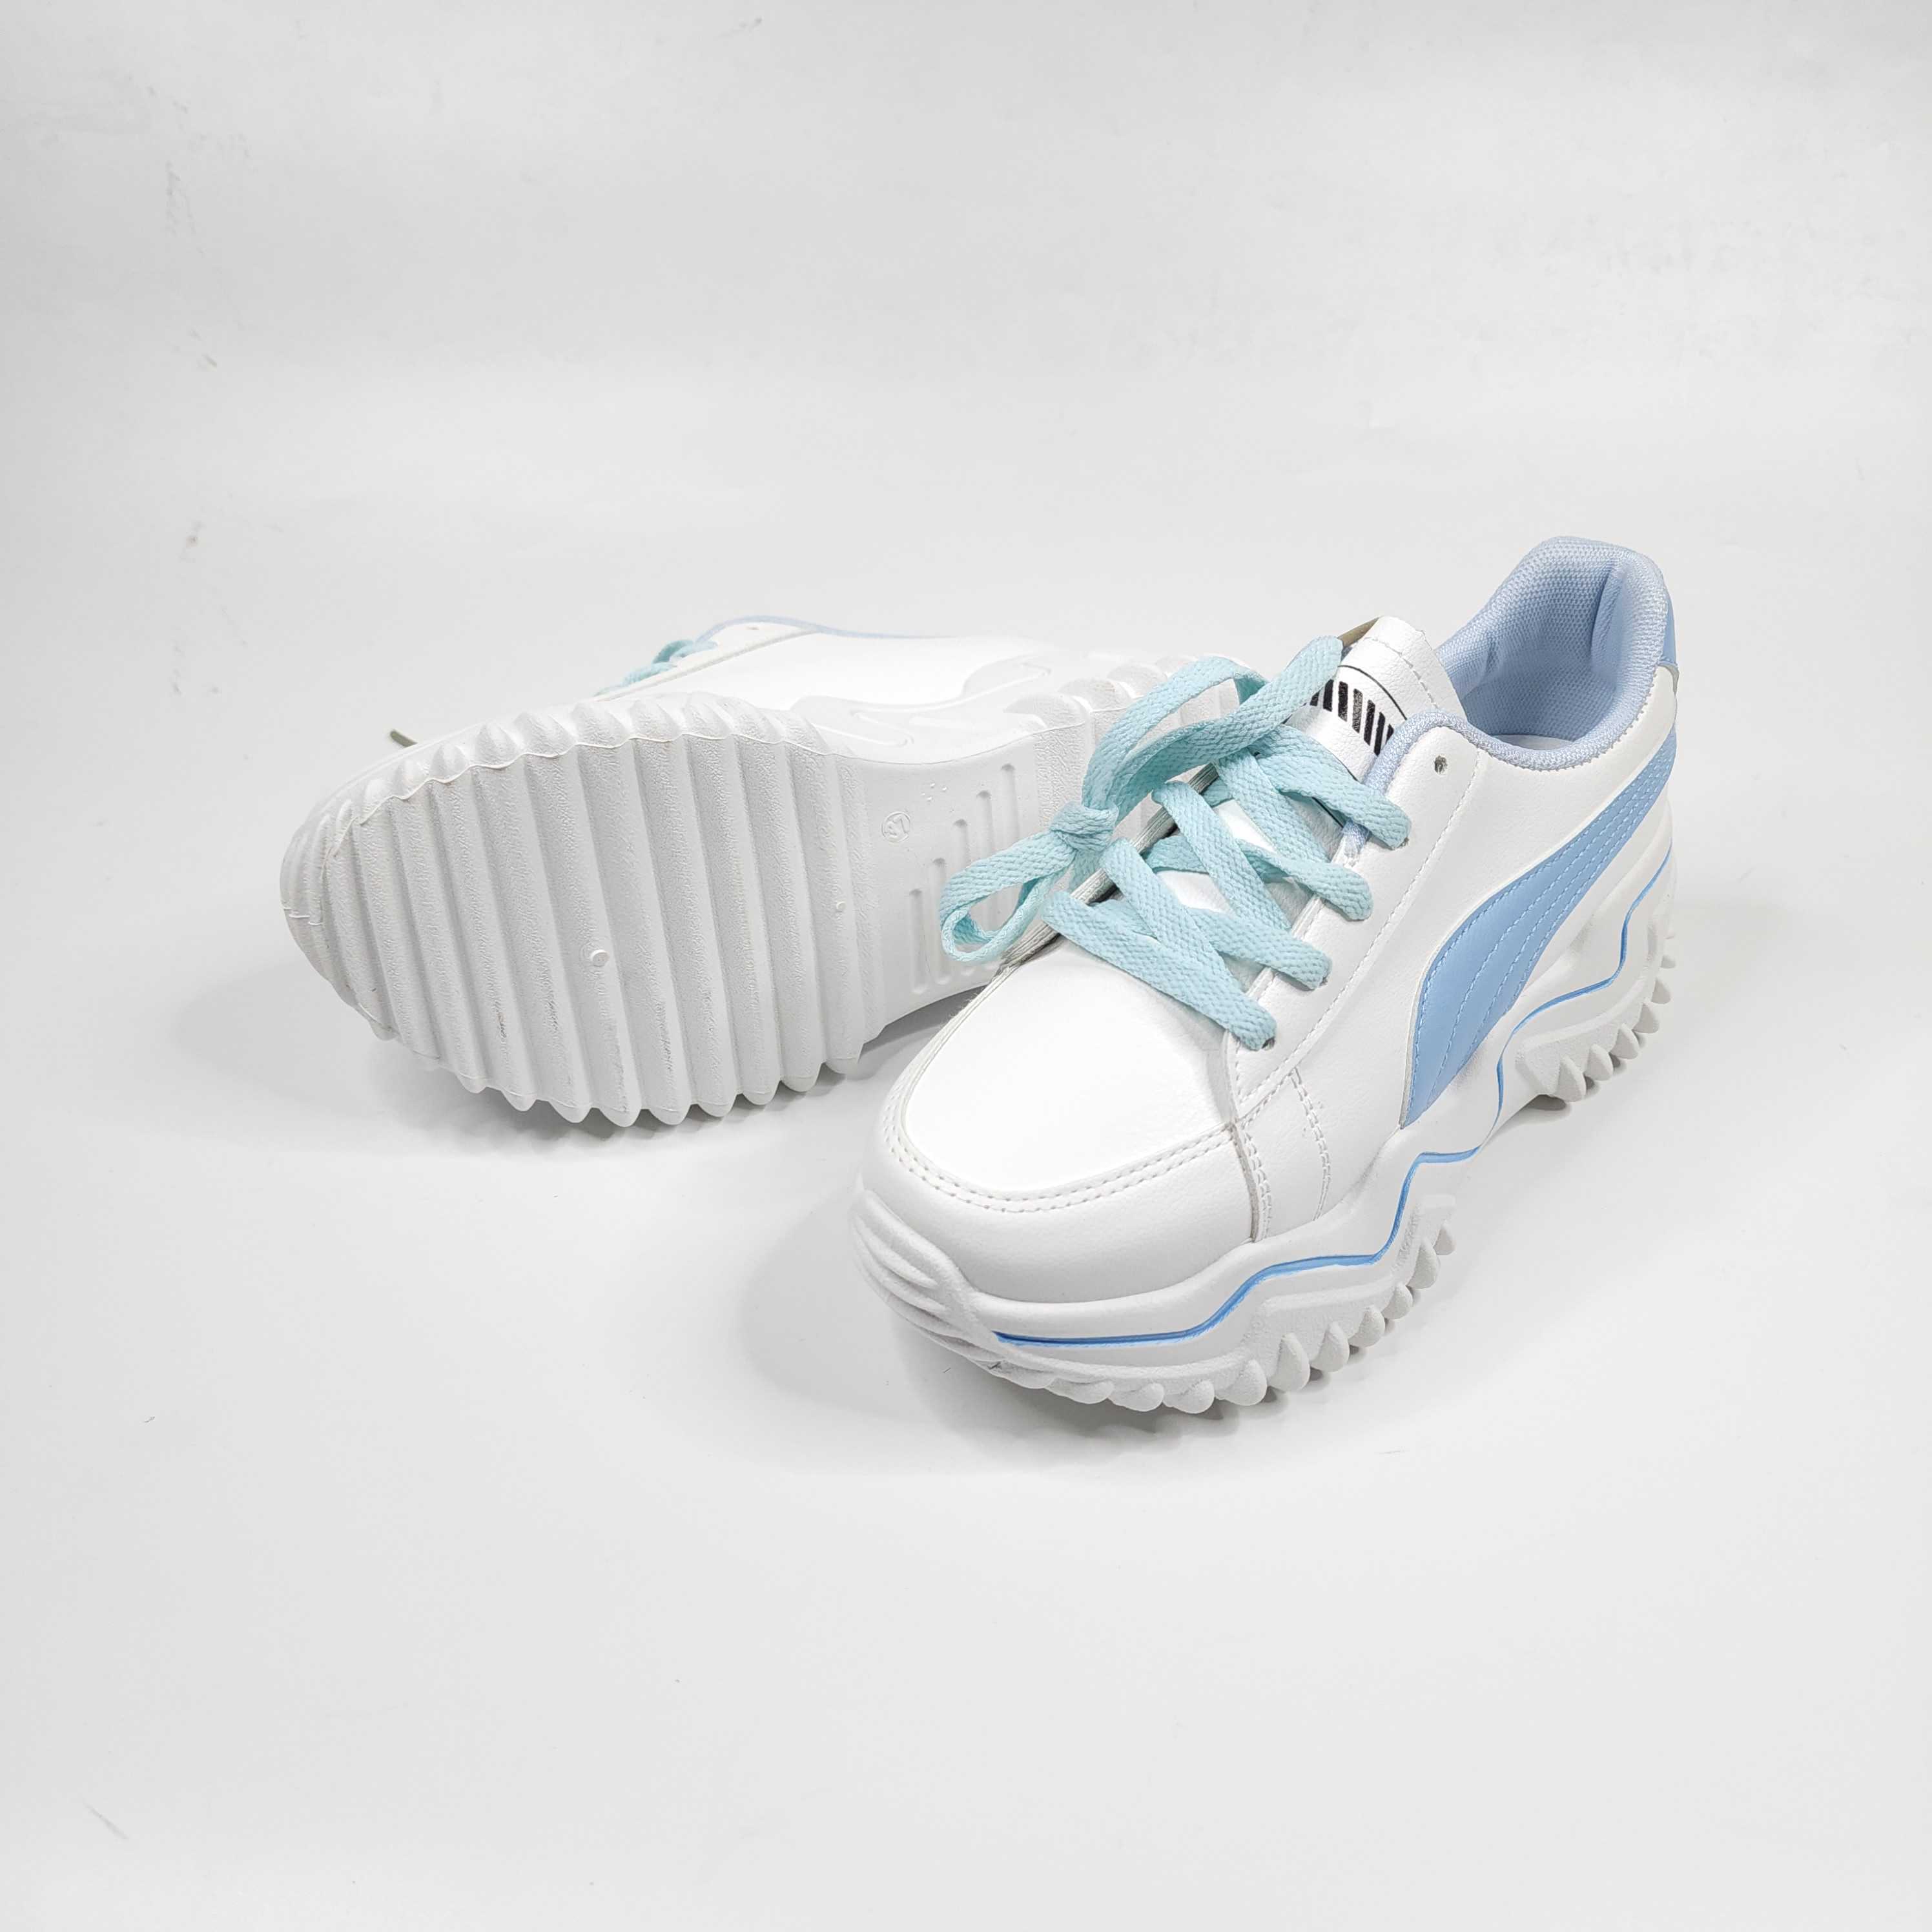 Blue Chunk Shoes - Maha fashions -  